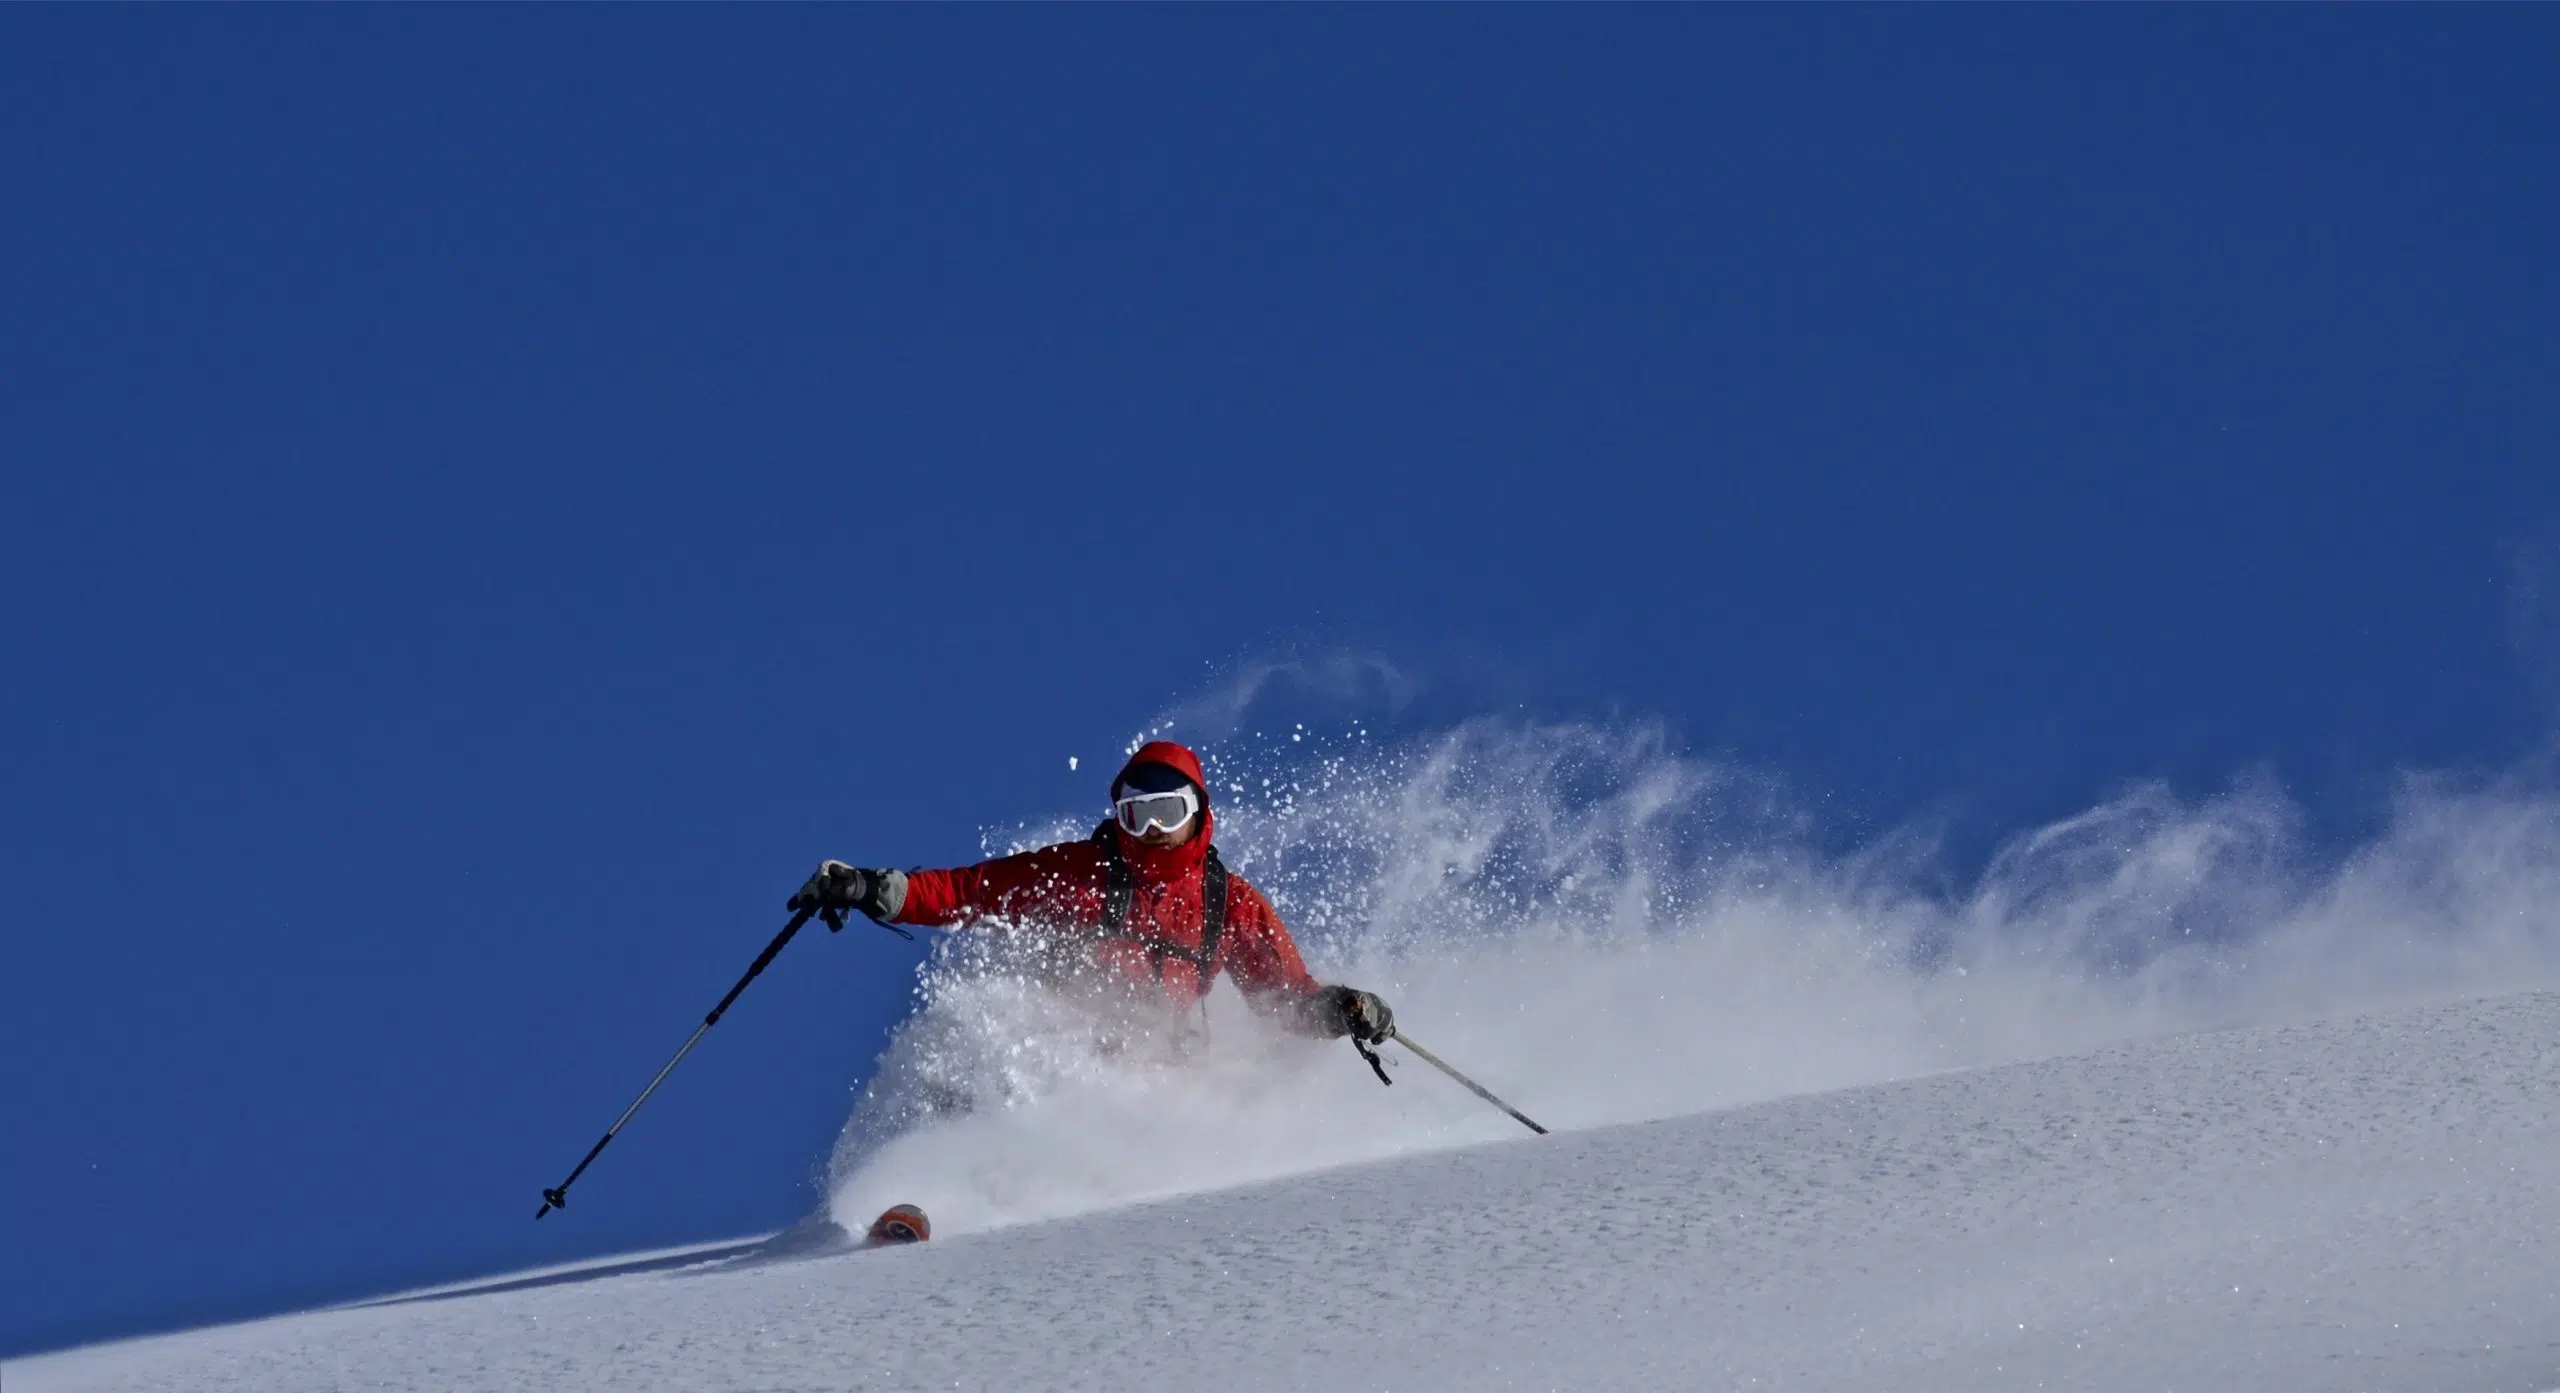 Ski resort industry group seeking more information from feds on pot decriminalization